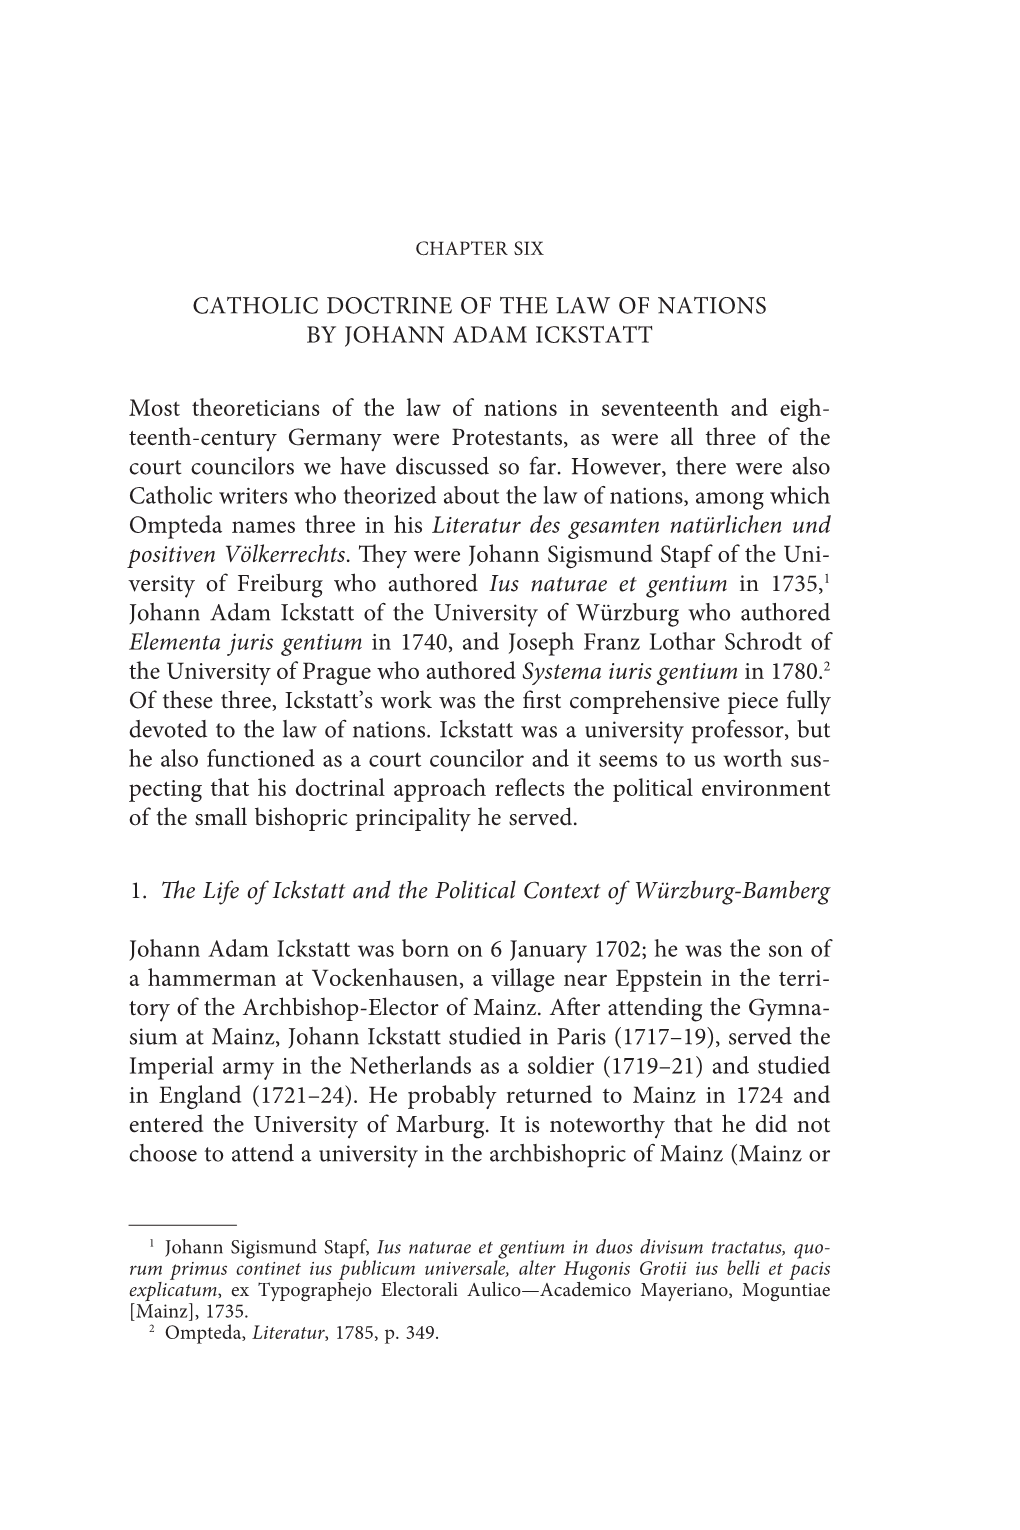 Catholic Doctrine of the Law of Nations by Johann Adam Ickstatt